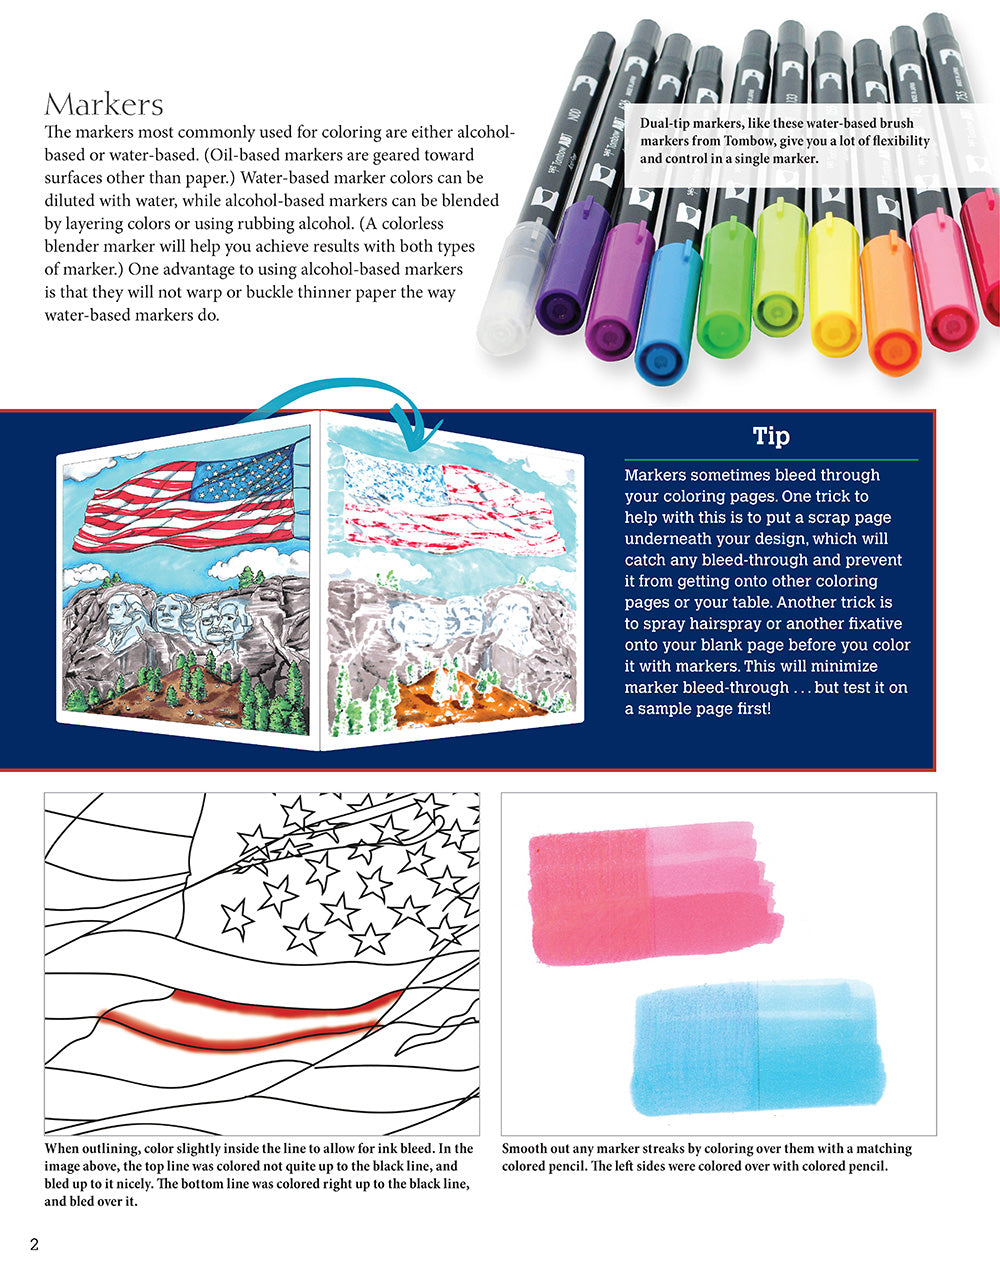 America the Beautiful Coloring Book